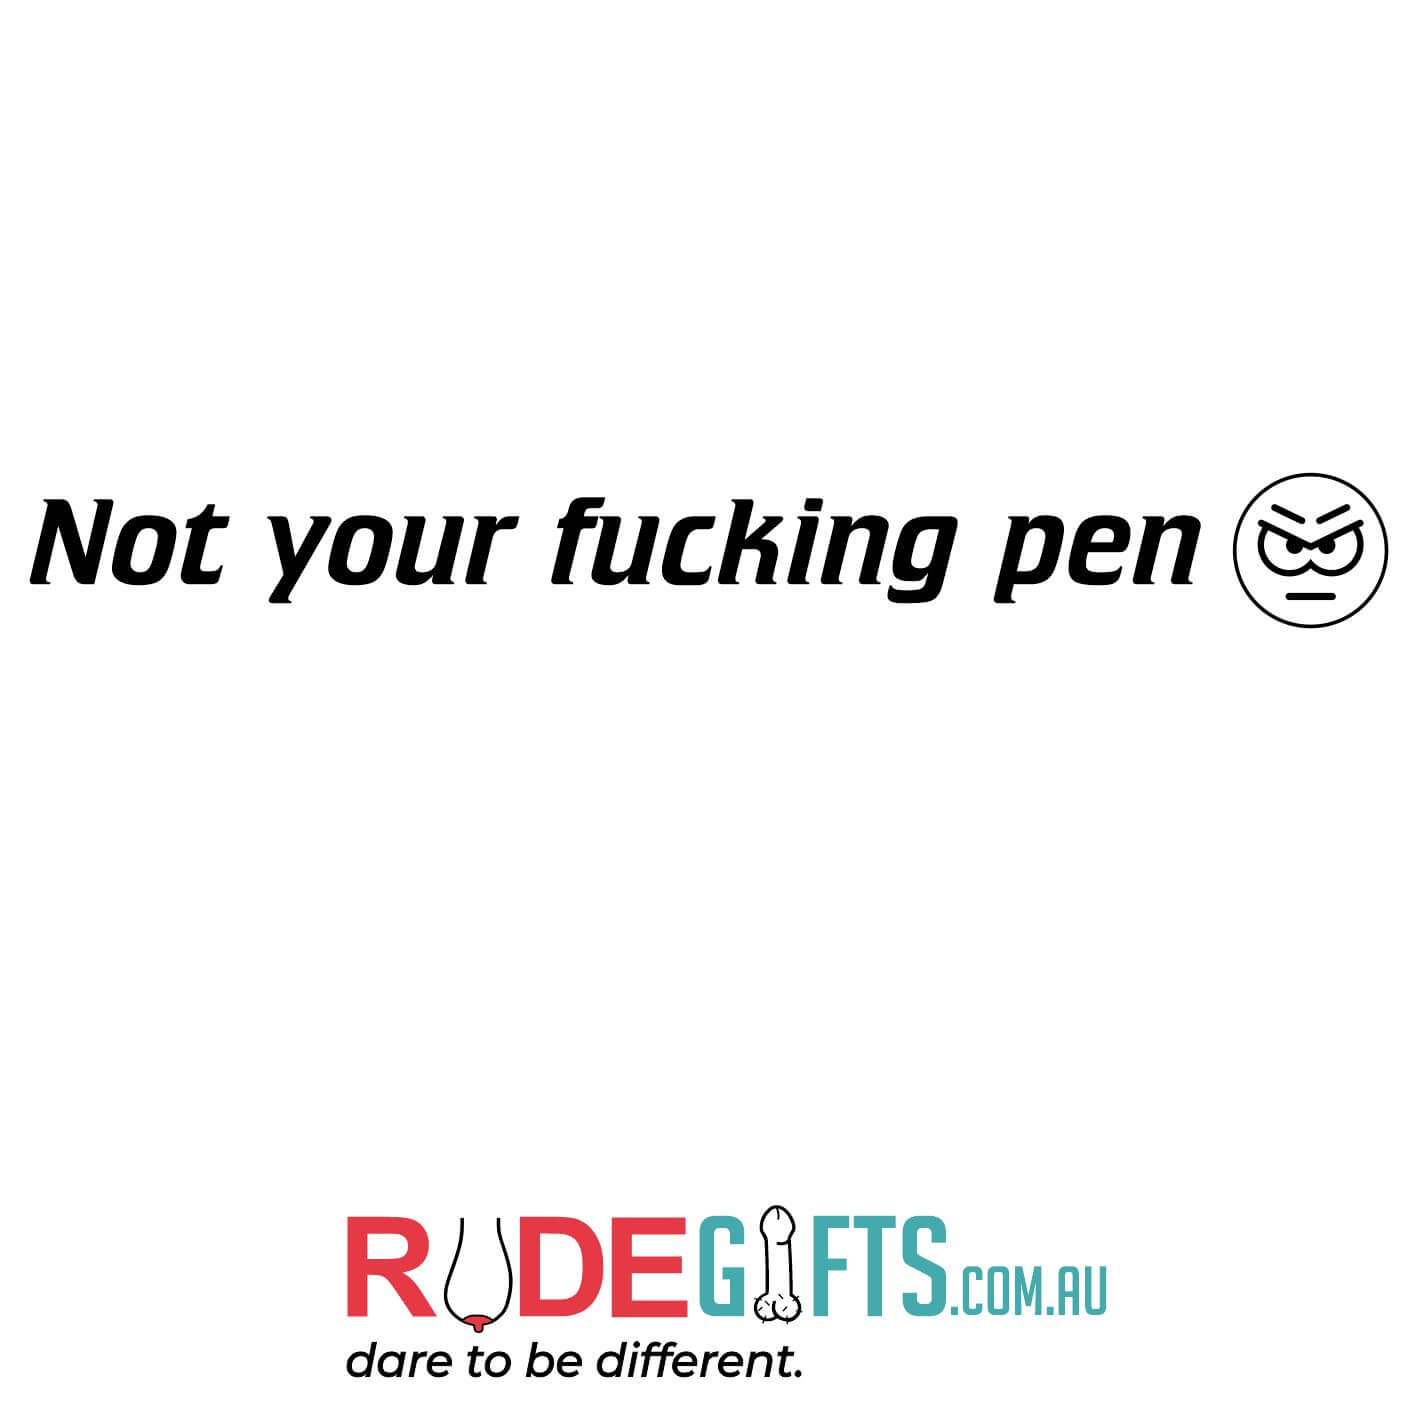 Not your fucking pen - 0